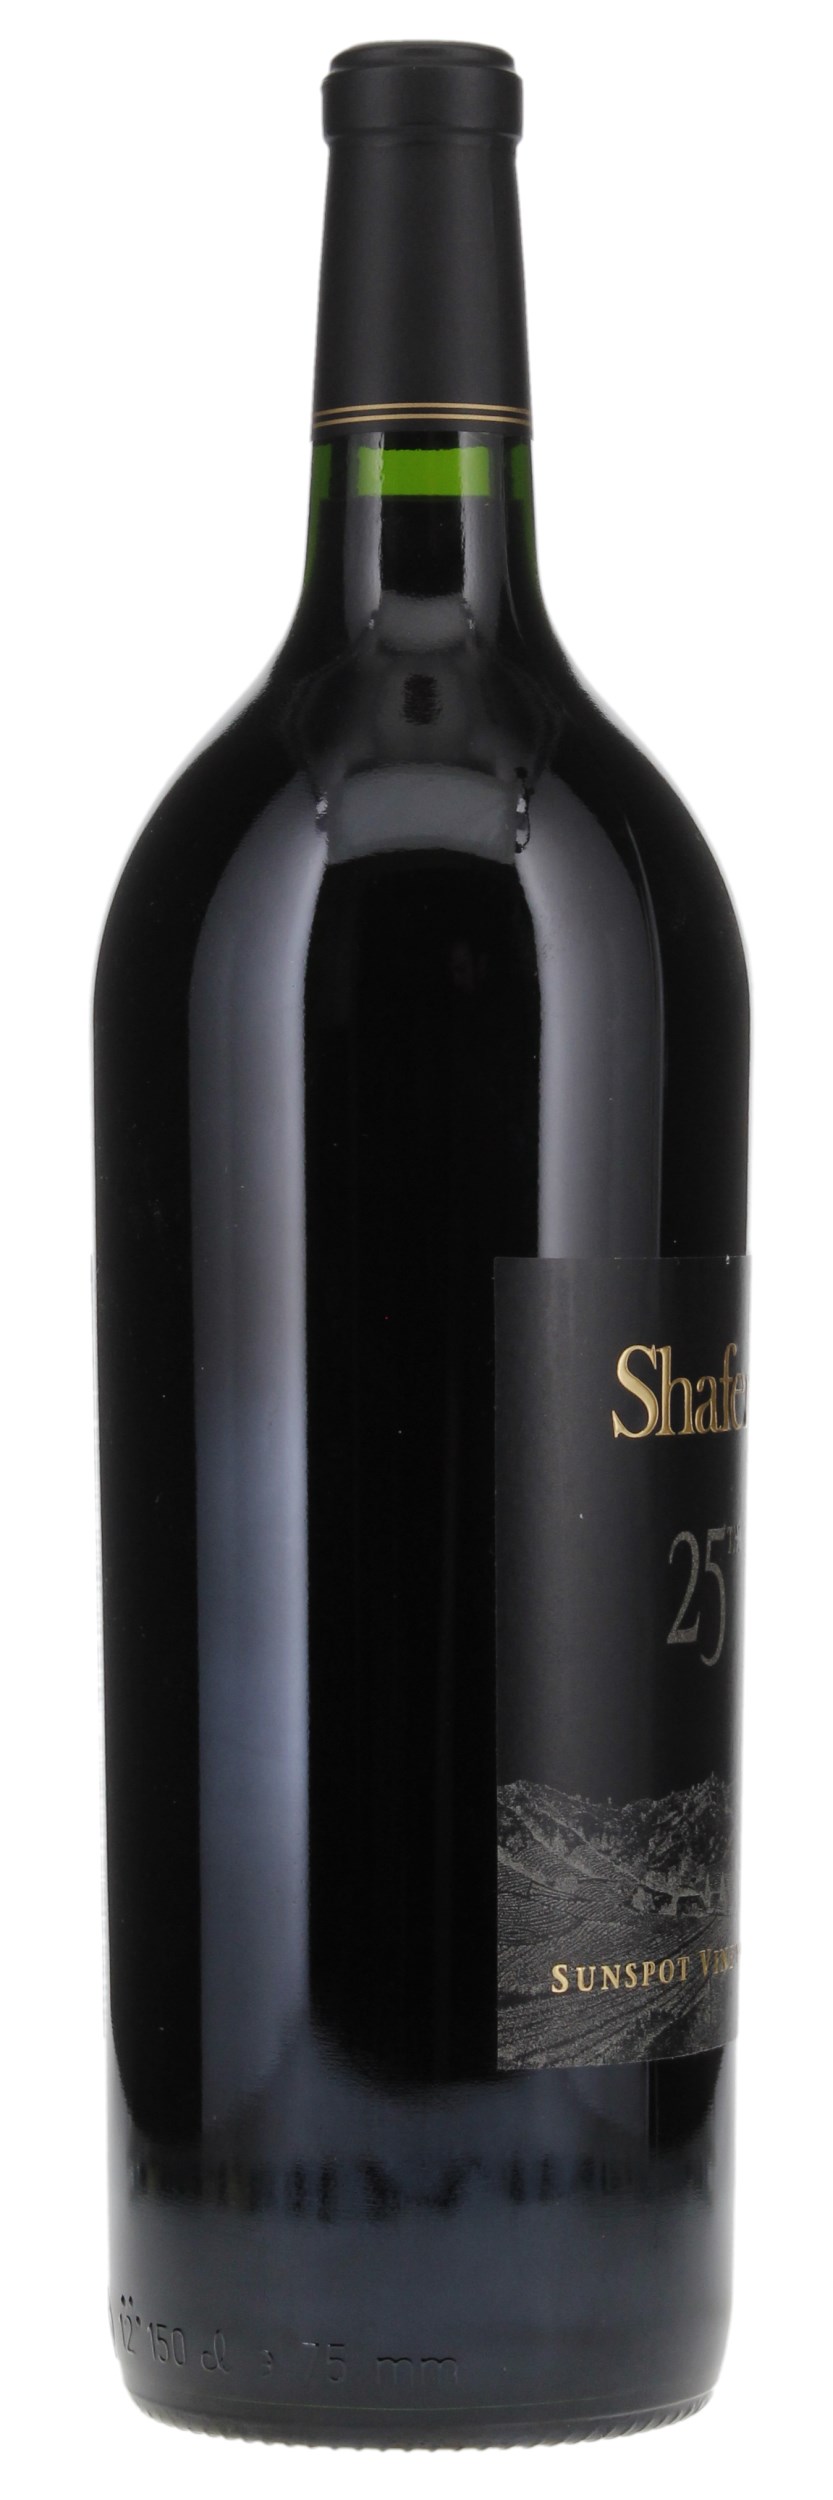 2001 Shafer Vineyards 25th Anniversary Sunspot Vineyard Cabernet Sauvignon, 1.5ltr